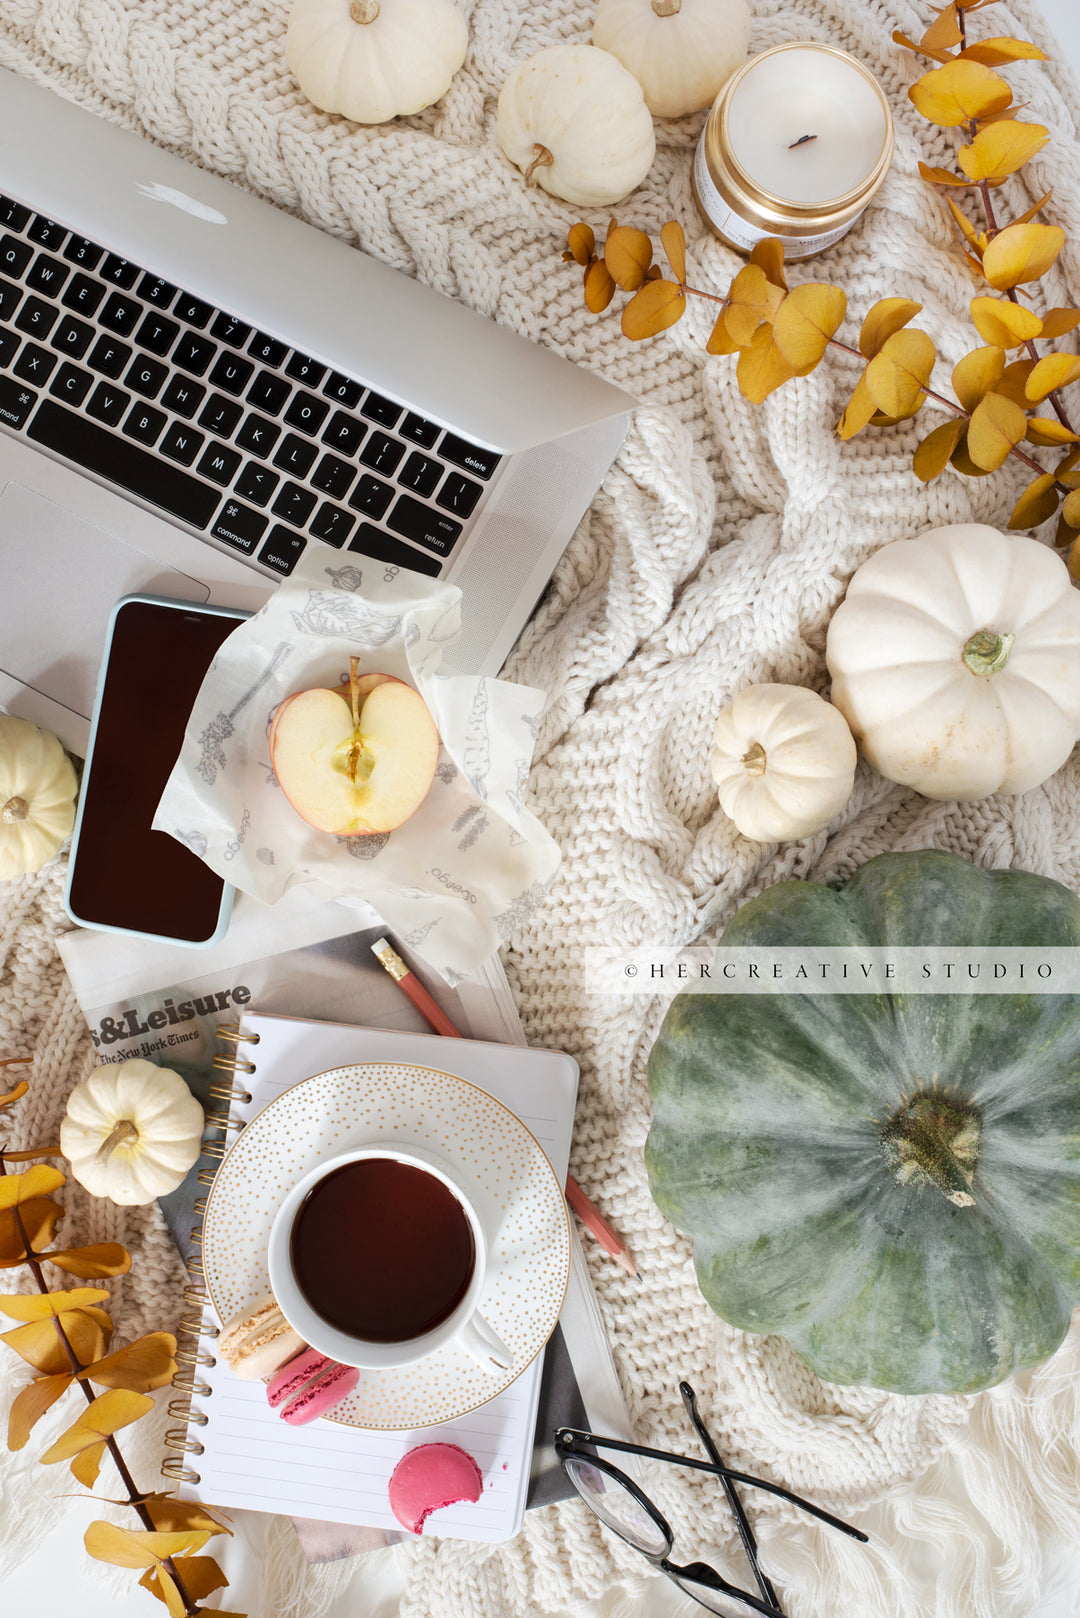 Tea, Fall Pumpkin & Laptop. Digital Stock Image.